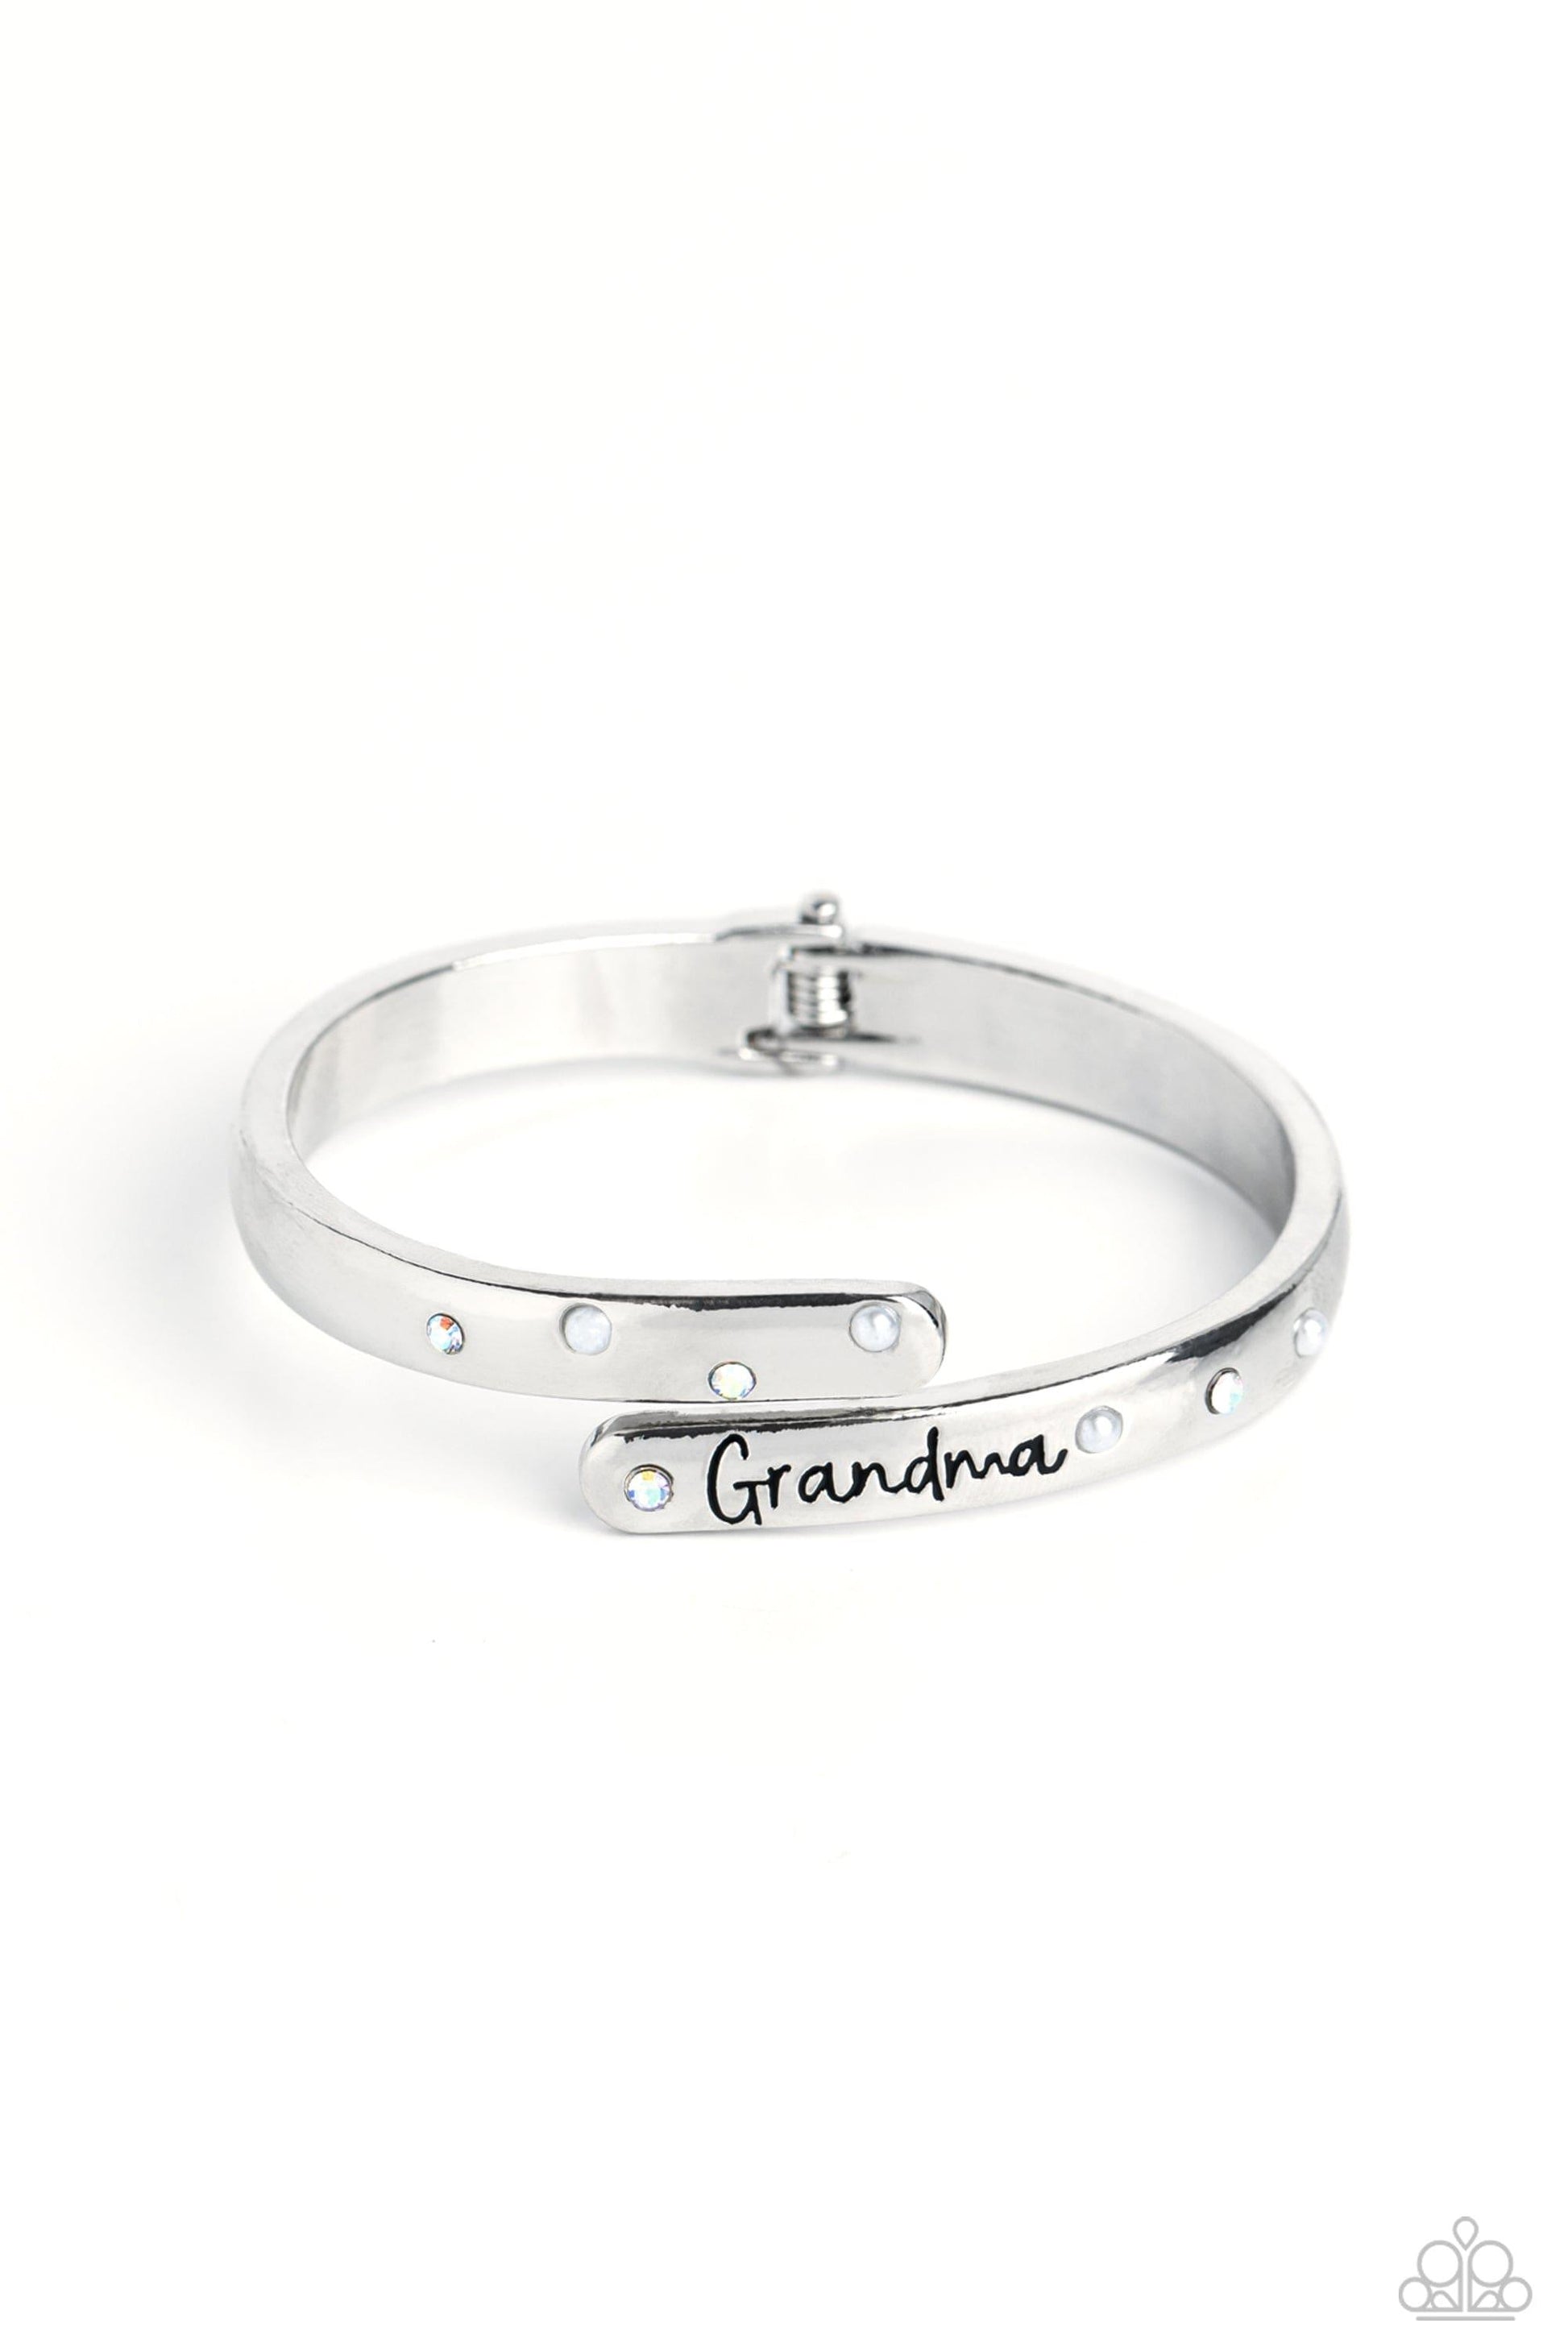 Paparazzi Accessories - Gorgeous Grandma - White Bracelet - Bling by JessieK